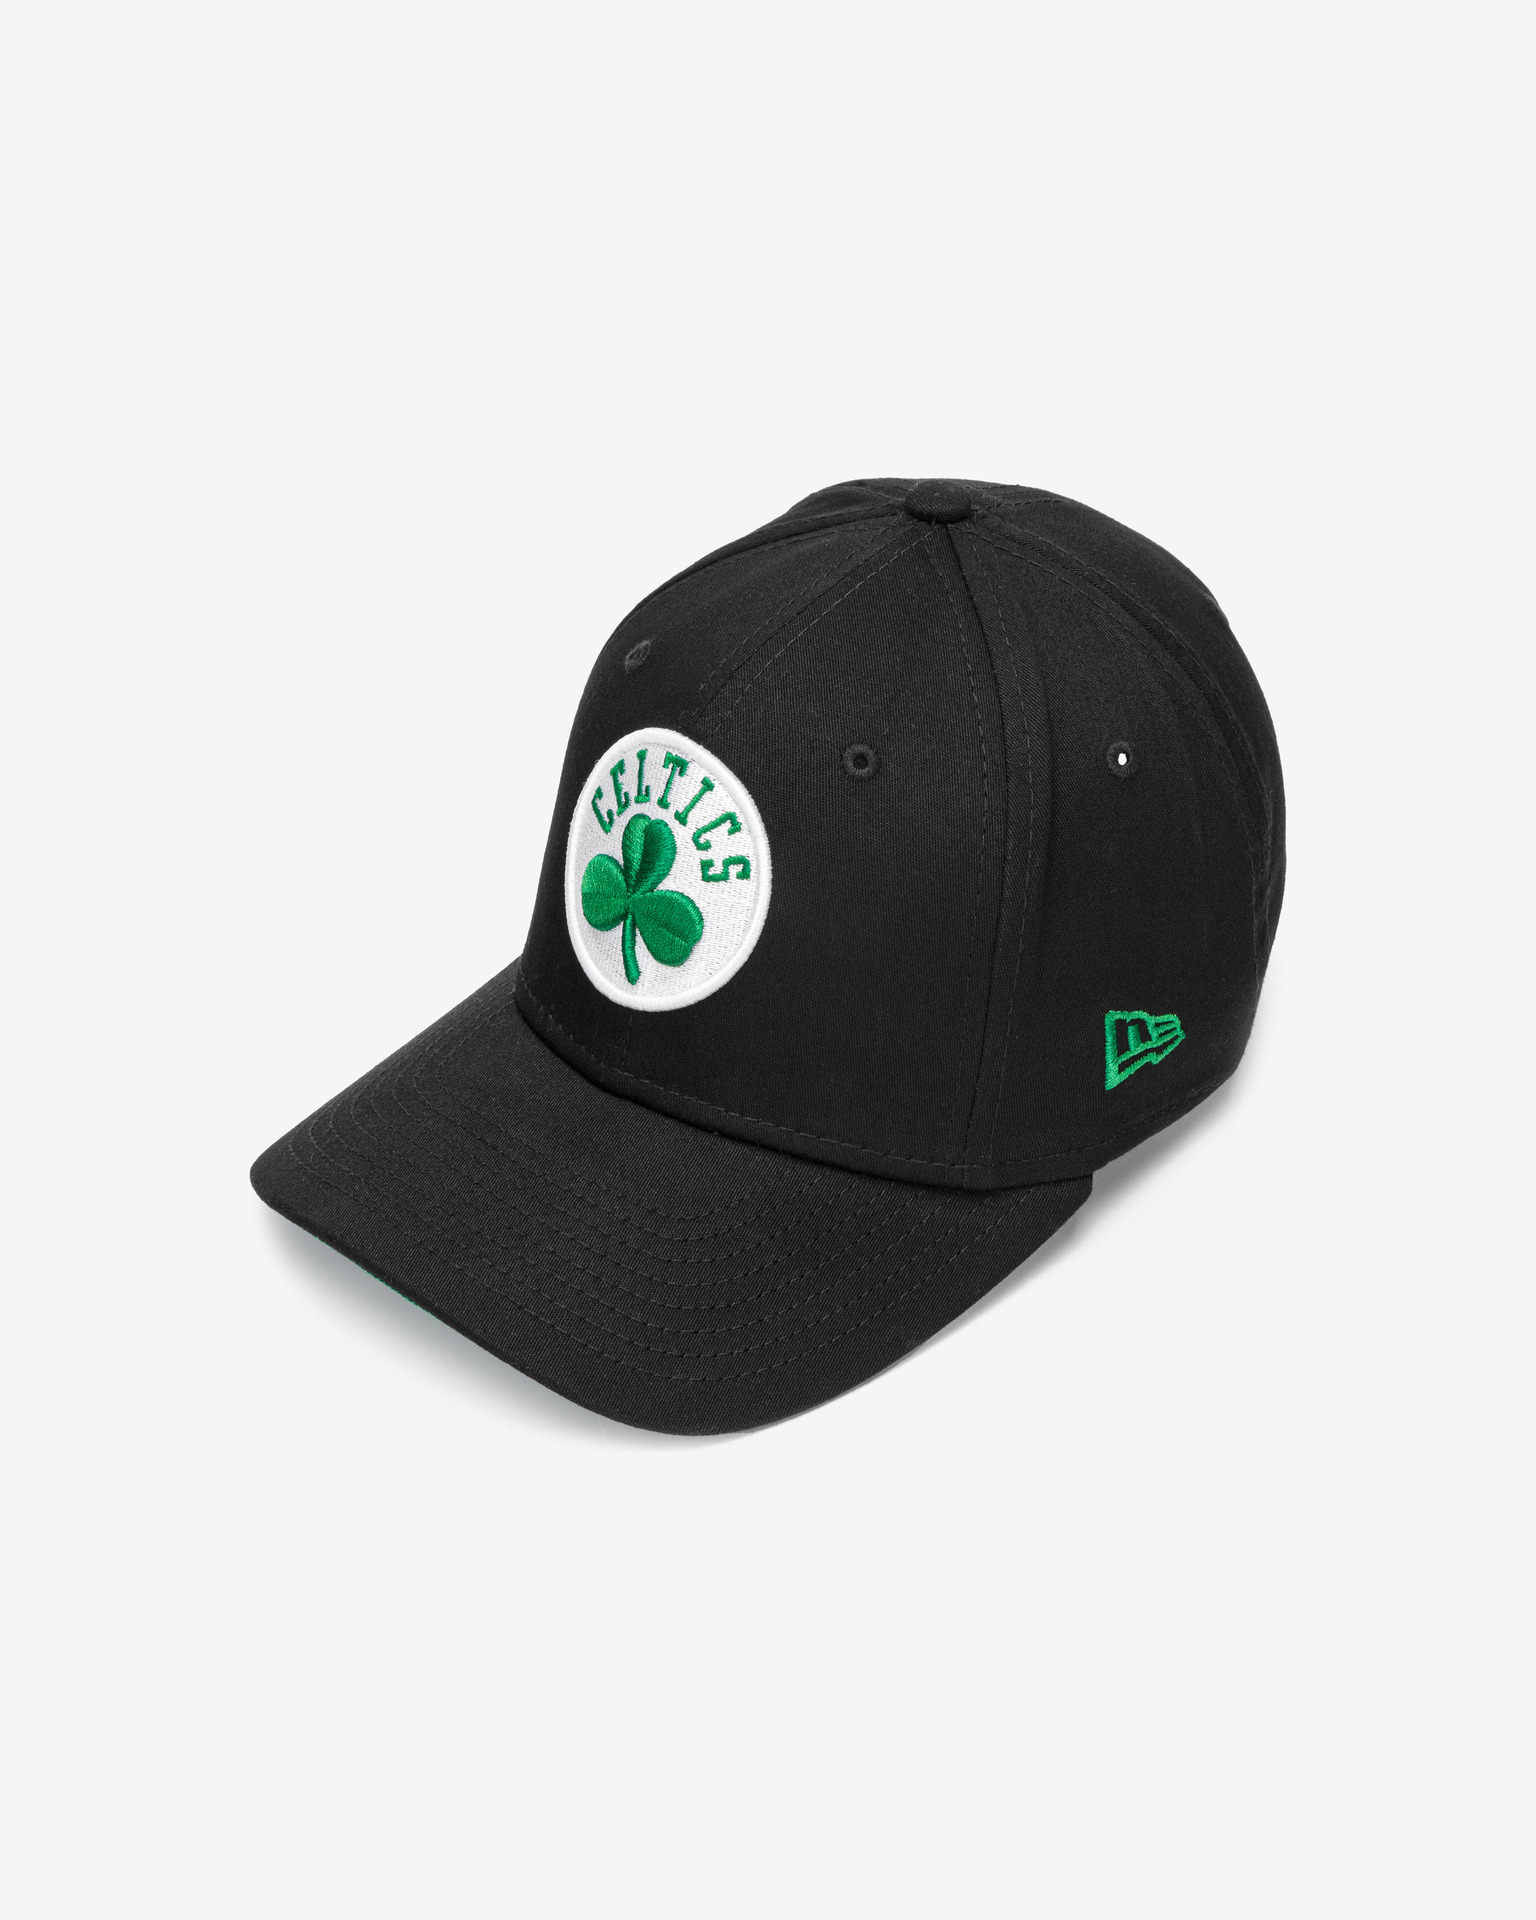 New Era - Boston Celtics Cap